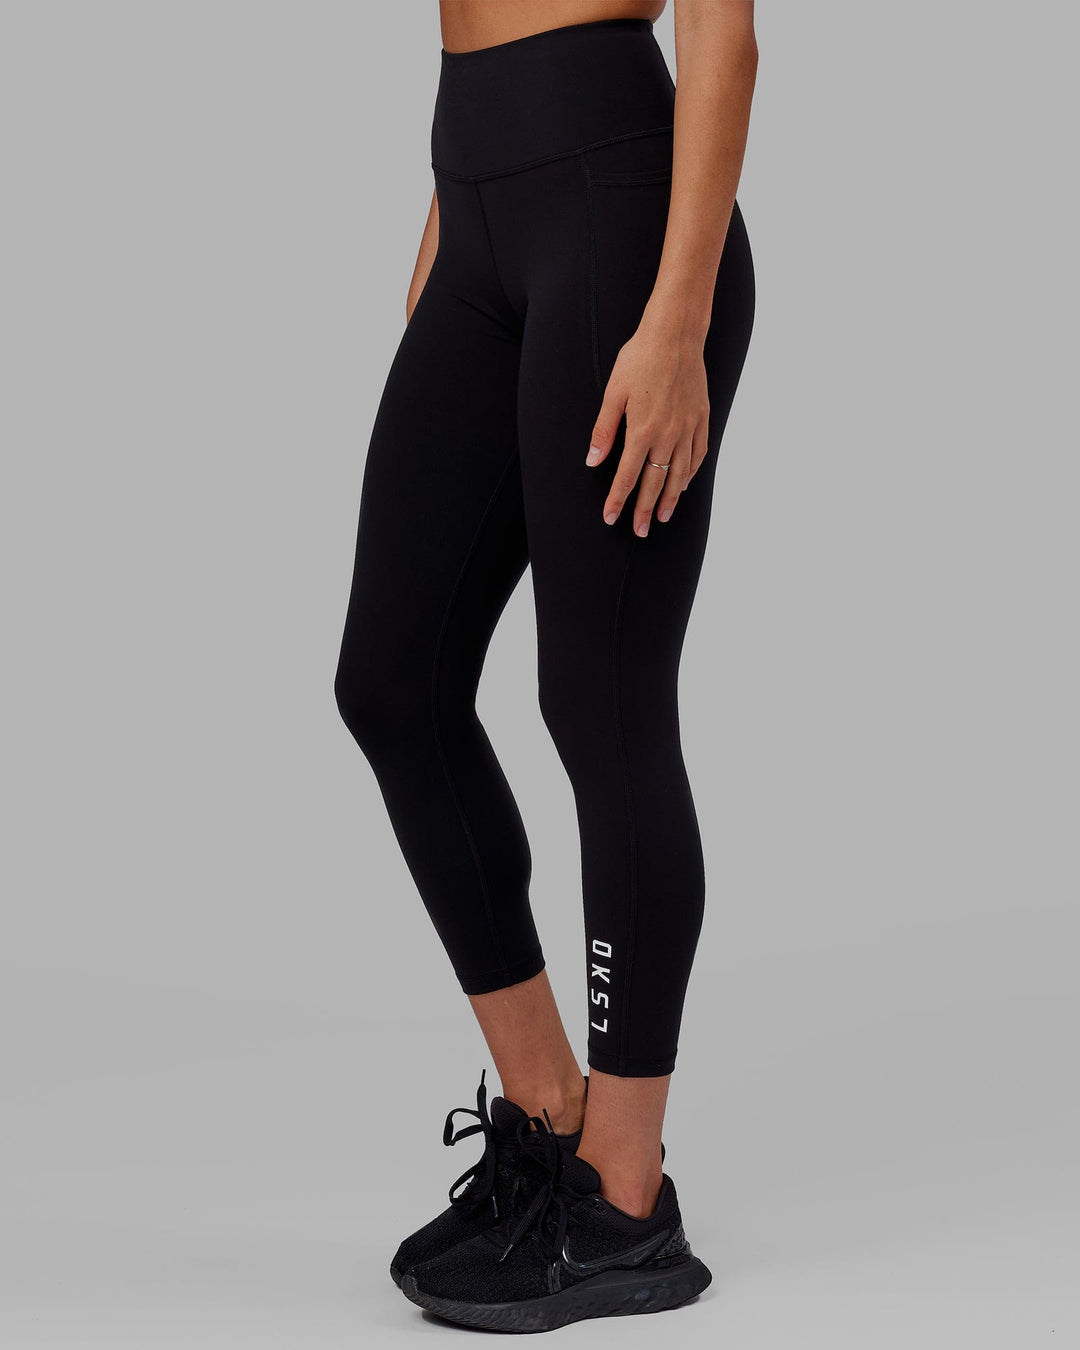 Repwear Fitness Lux 7/8 Leggings Black